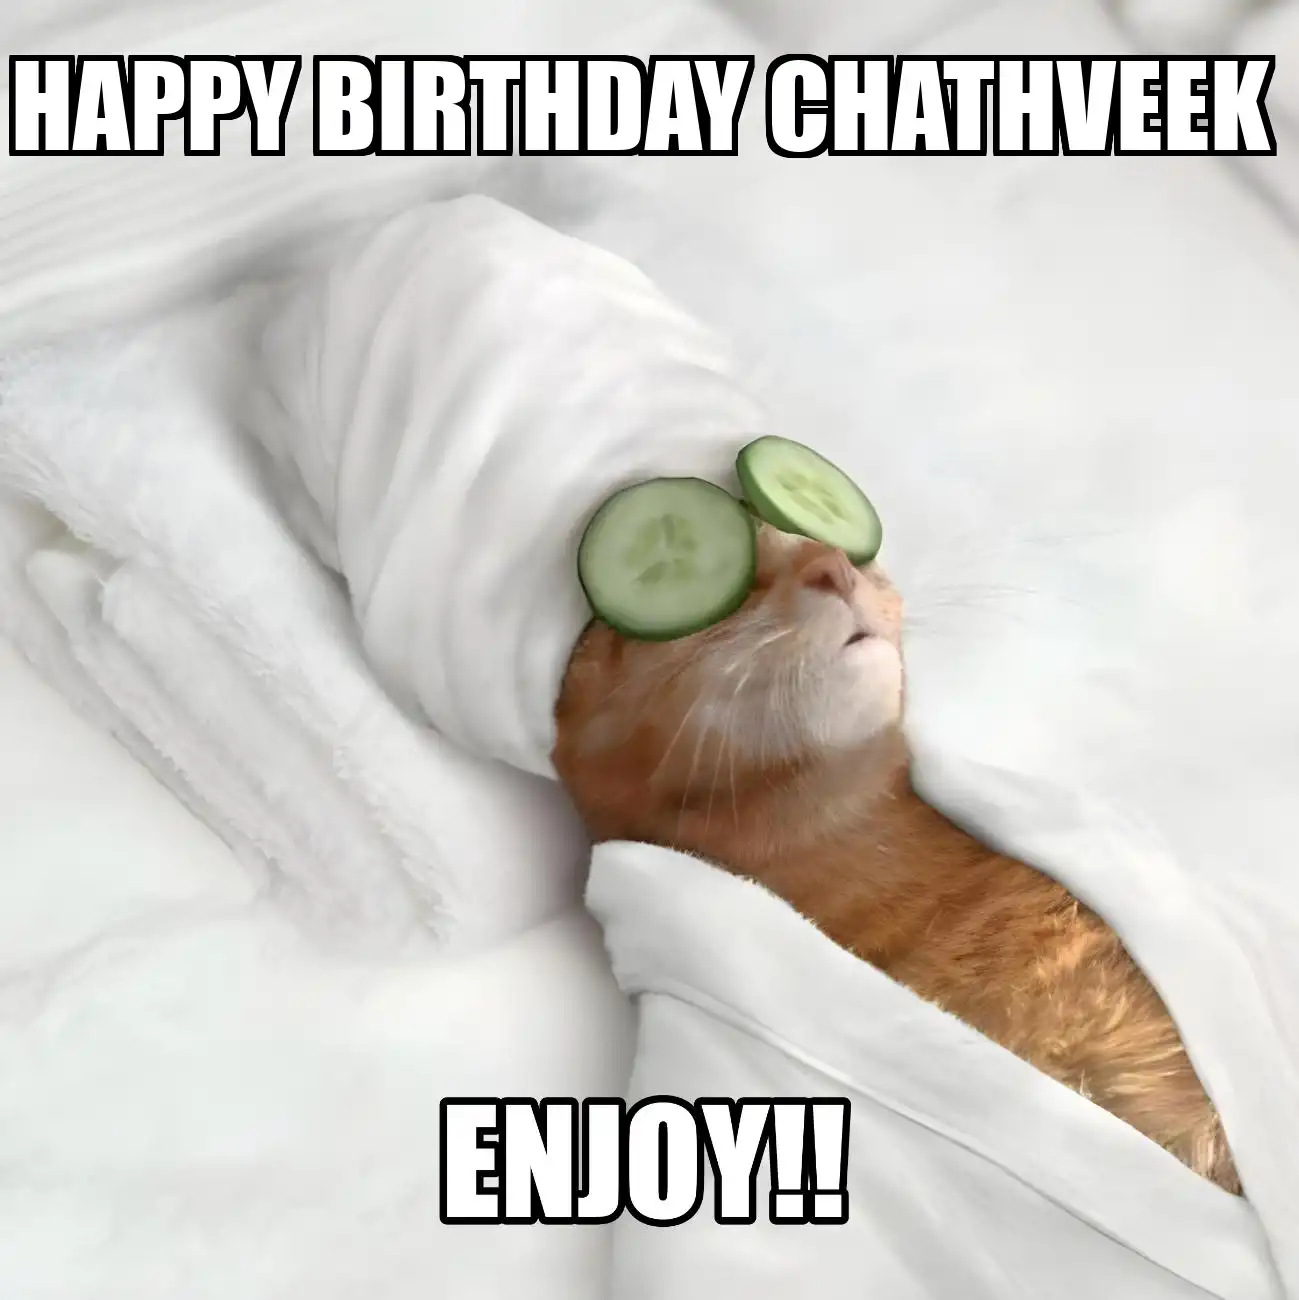 Happy Birthday Chathveek Enjoy Cat Meme